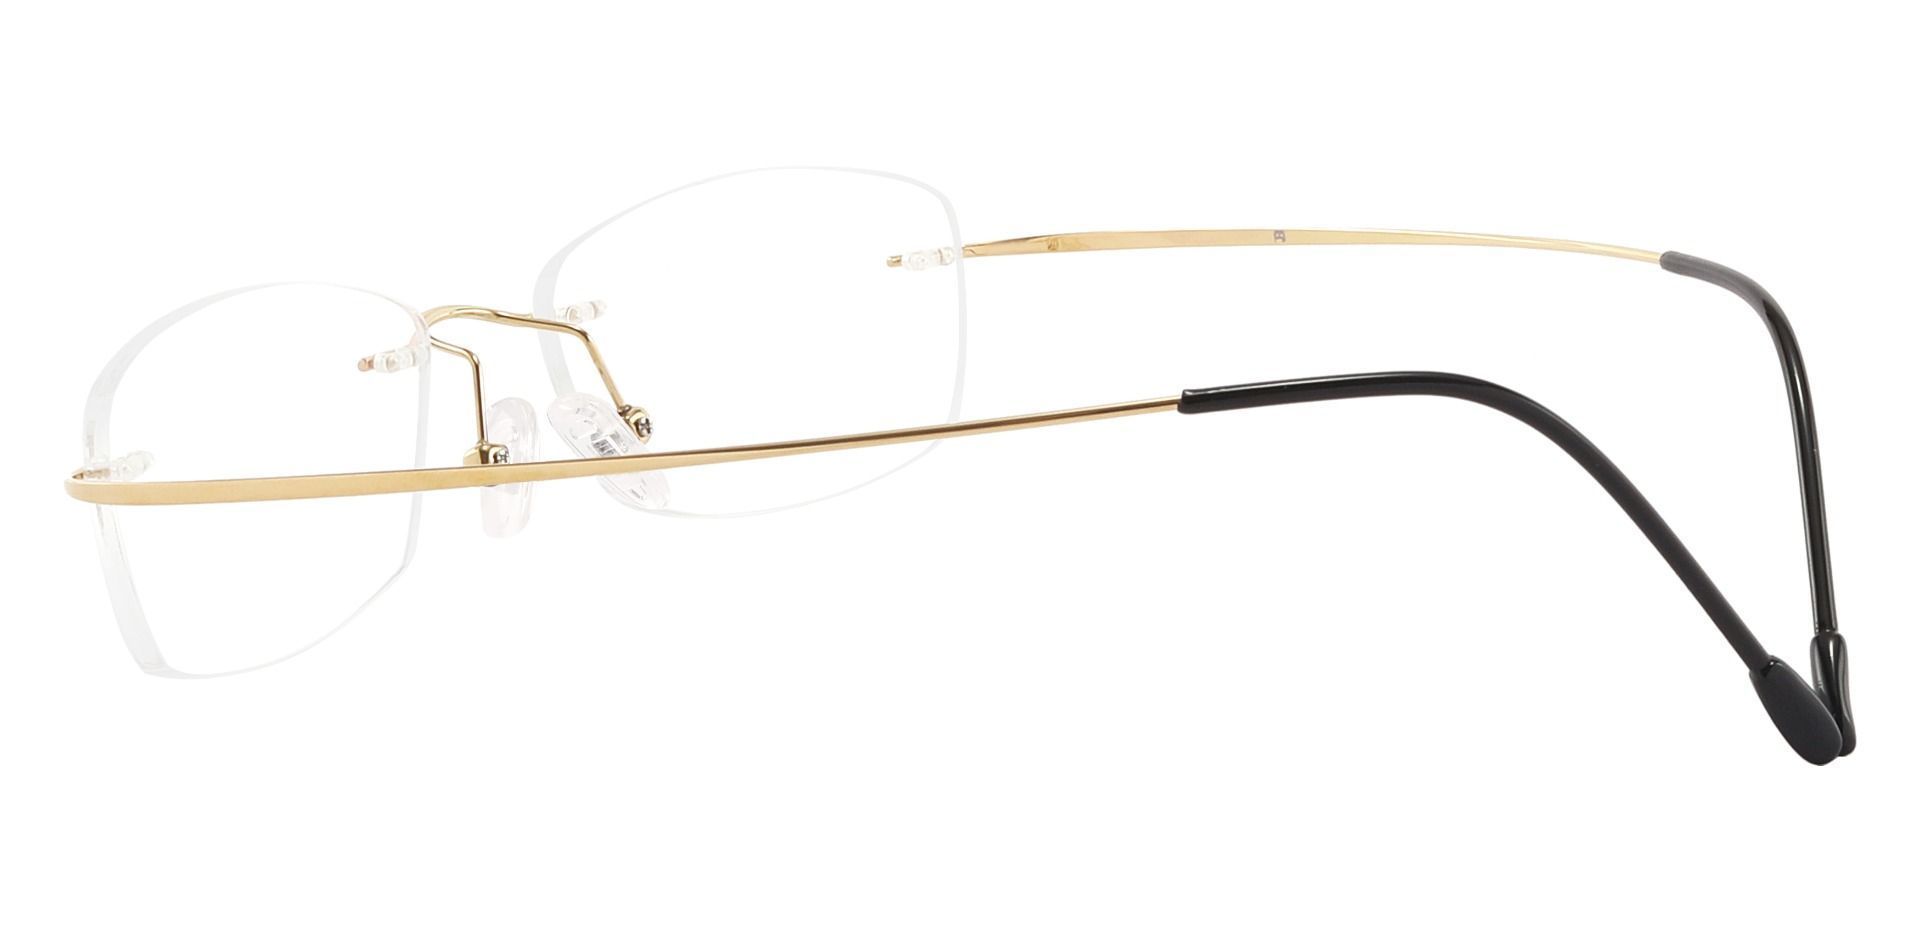 Providence Rimless Single Vision Glasses - Gold